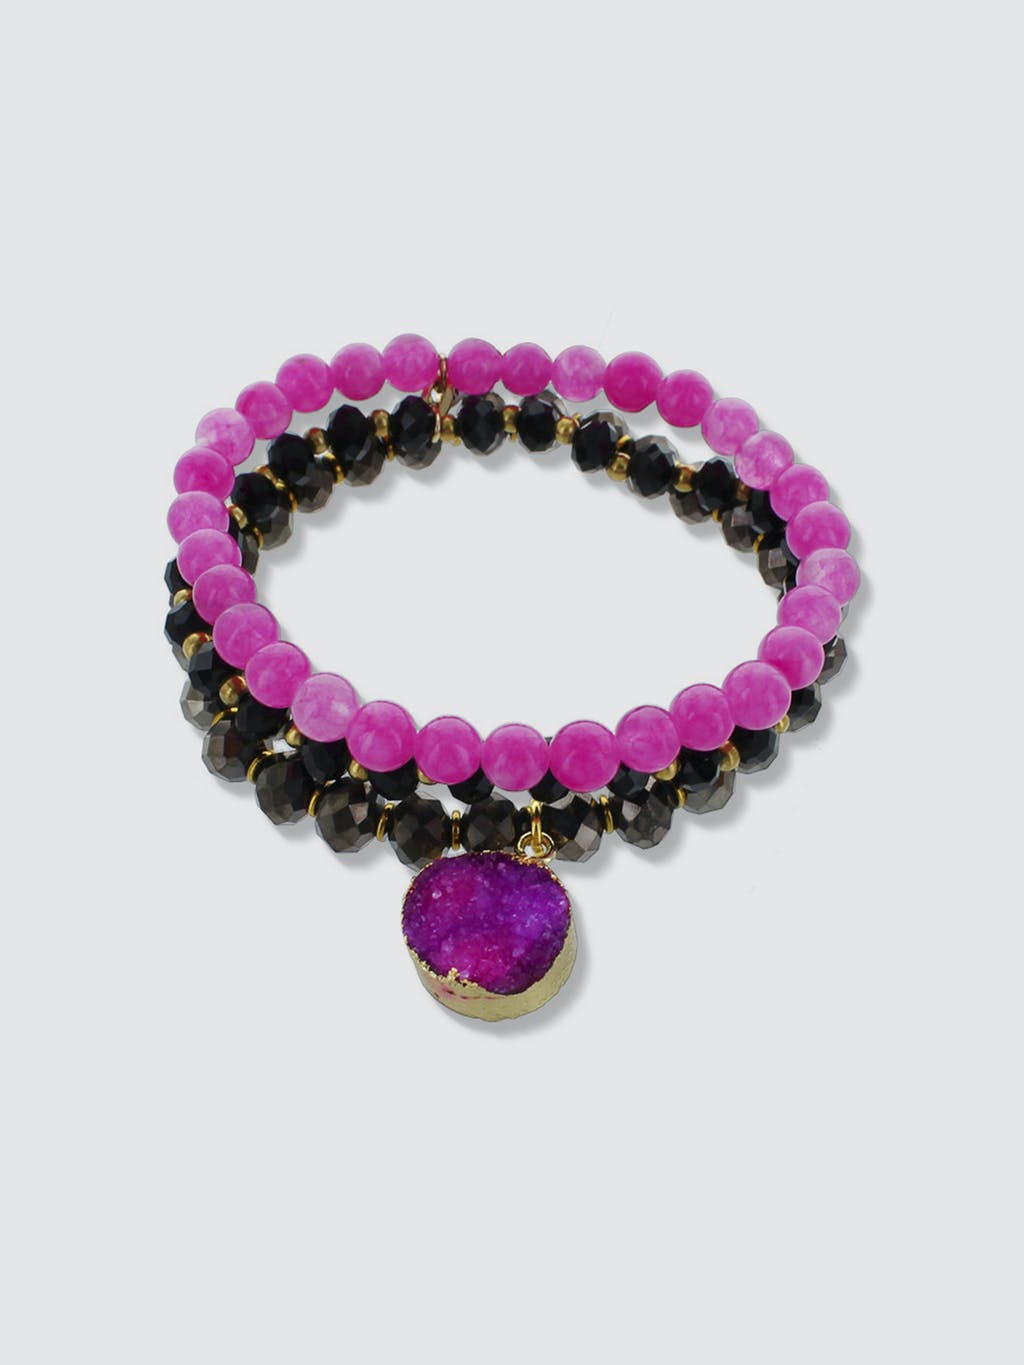 Crystal Beads And Druzy Stone Stretch Bracelets